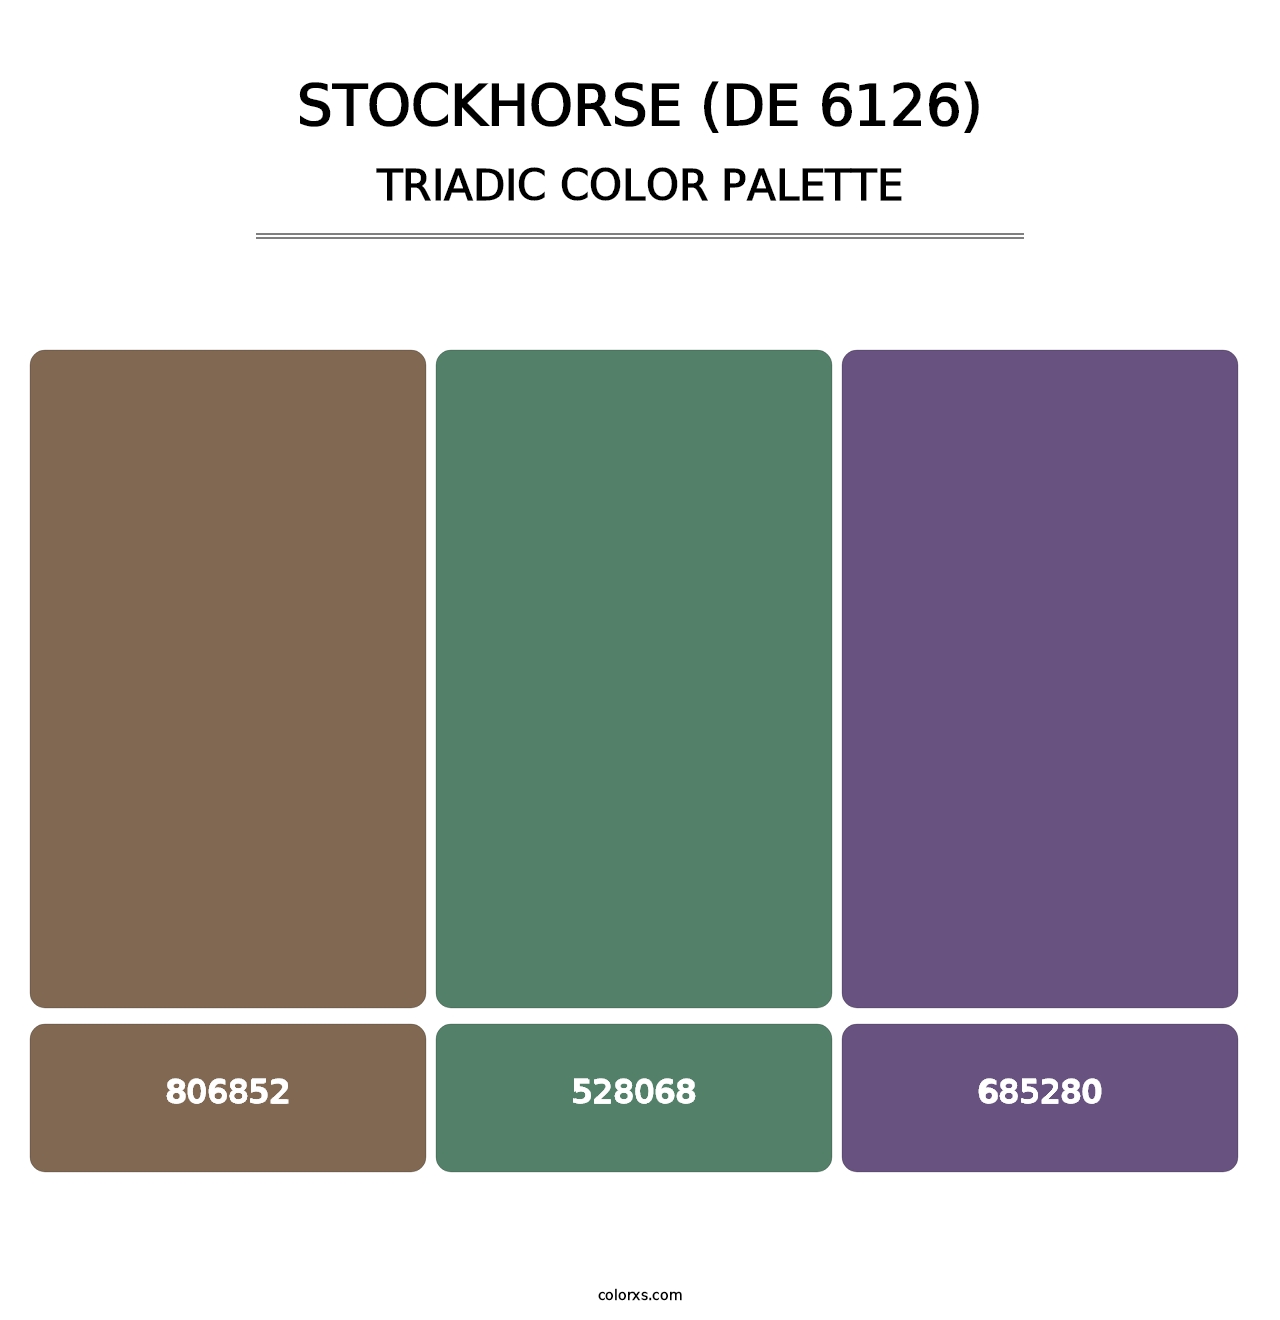 Stockhorse (DE 6126) - Triadic Color Palette